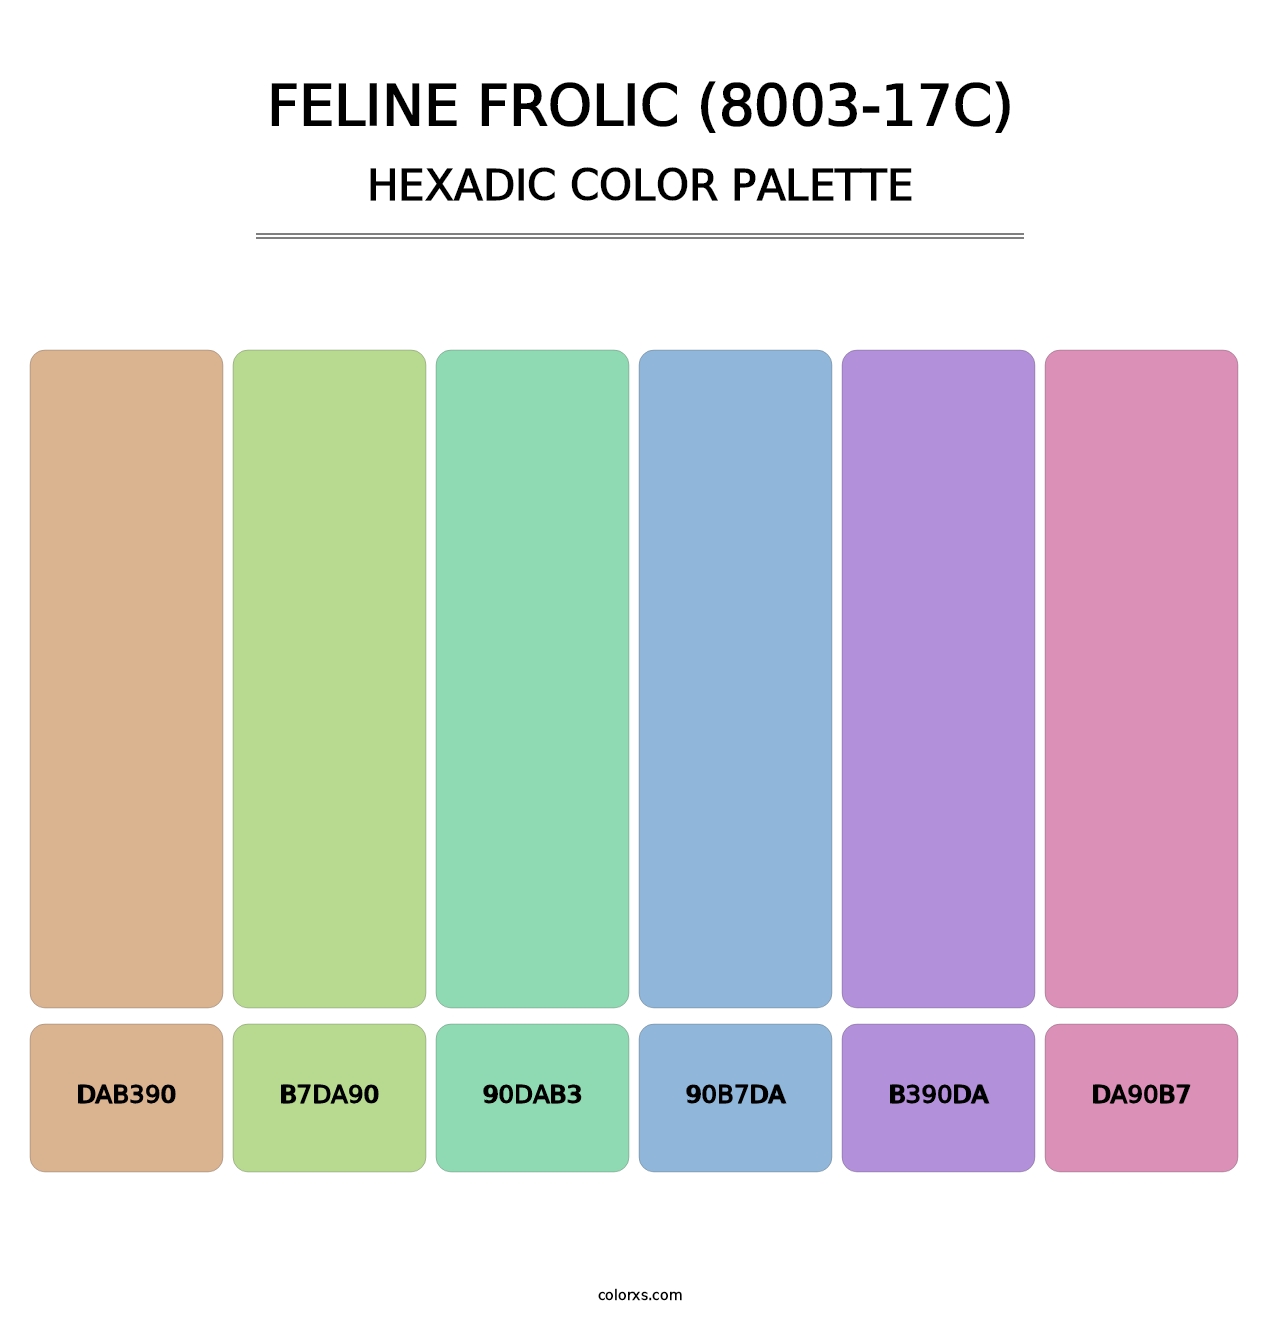 Feline Frolic (8003-17C) - Hexadic Color Palette